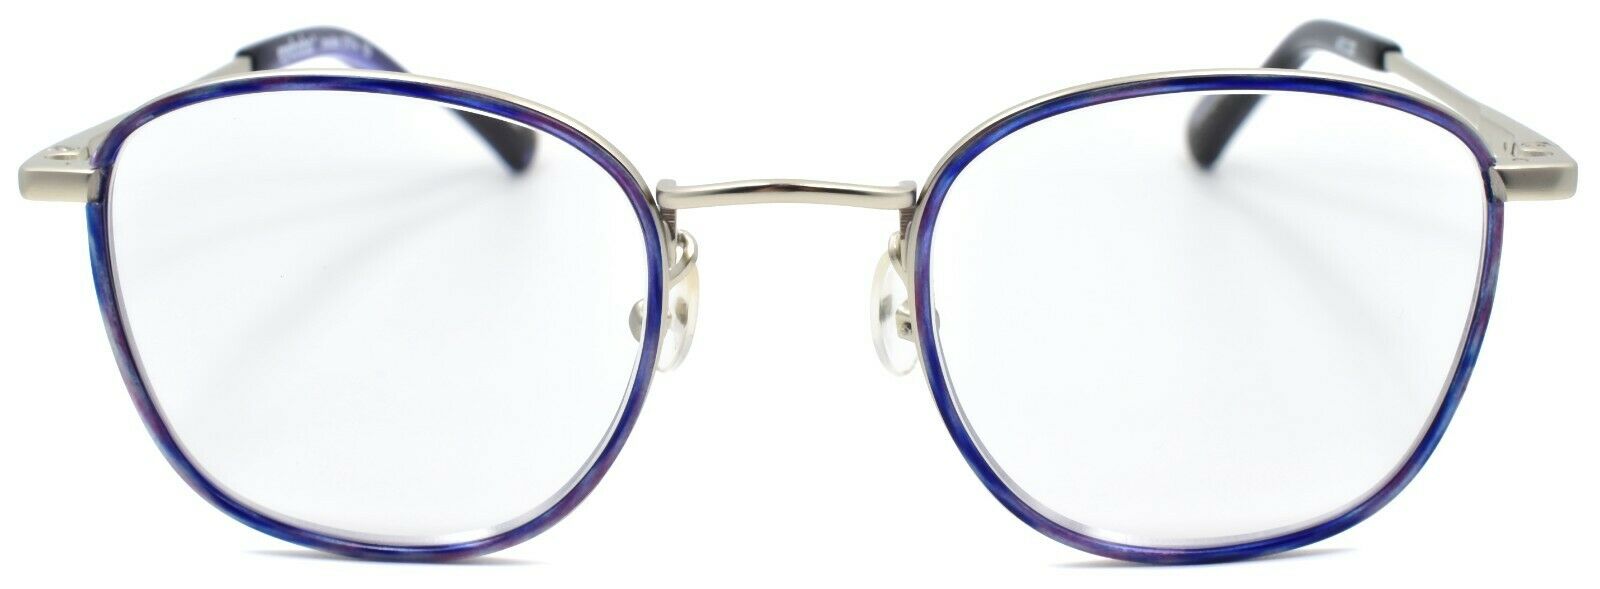 2-Eyebobs Inside 3174 10 Unisex Reading Glasses Blue / Silver +2.00-842754169486-IKSpecs